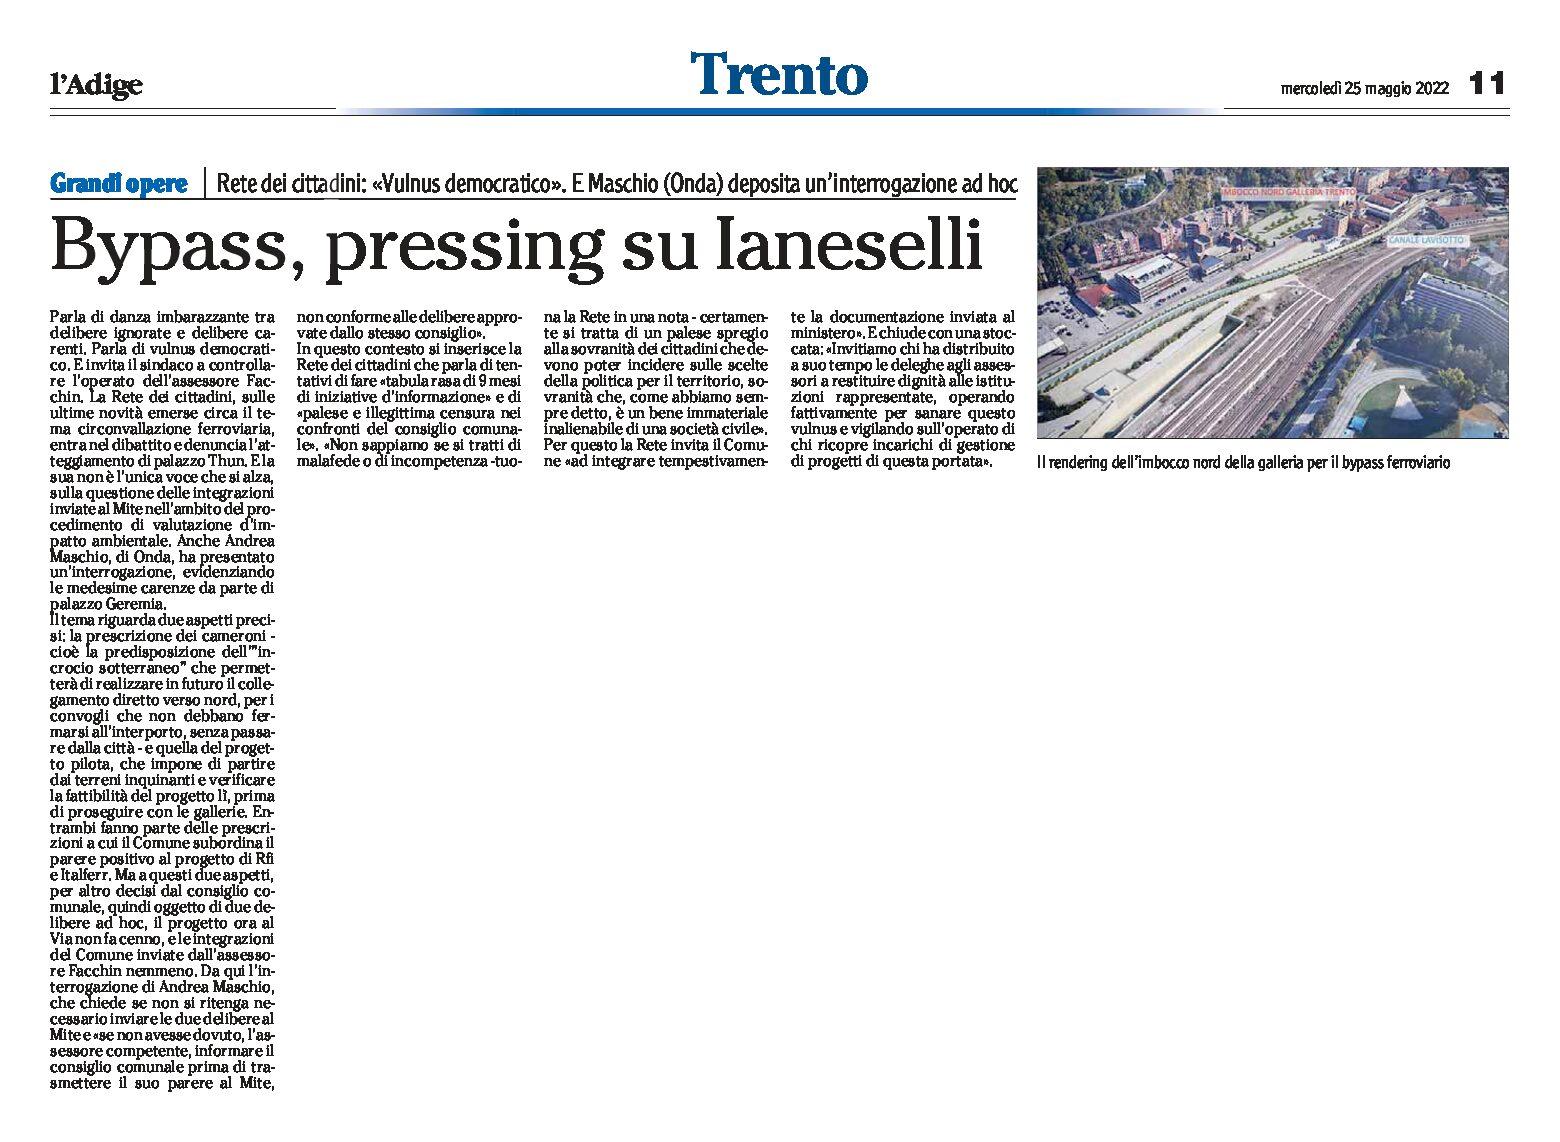 Trento, bypass: pressing sul sindaco Ianeselli